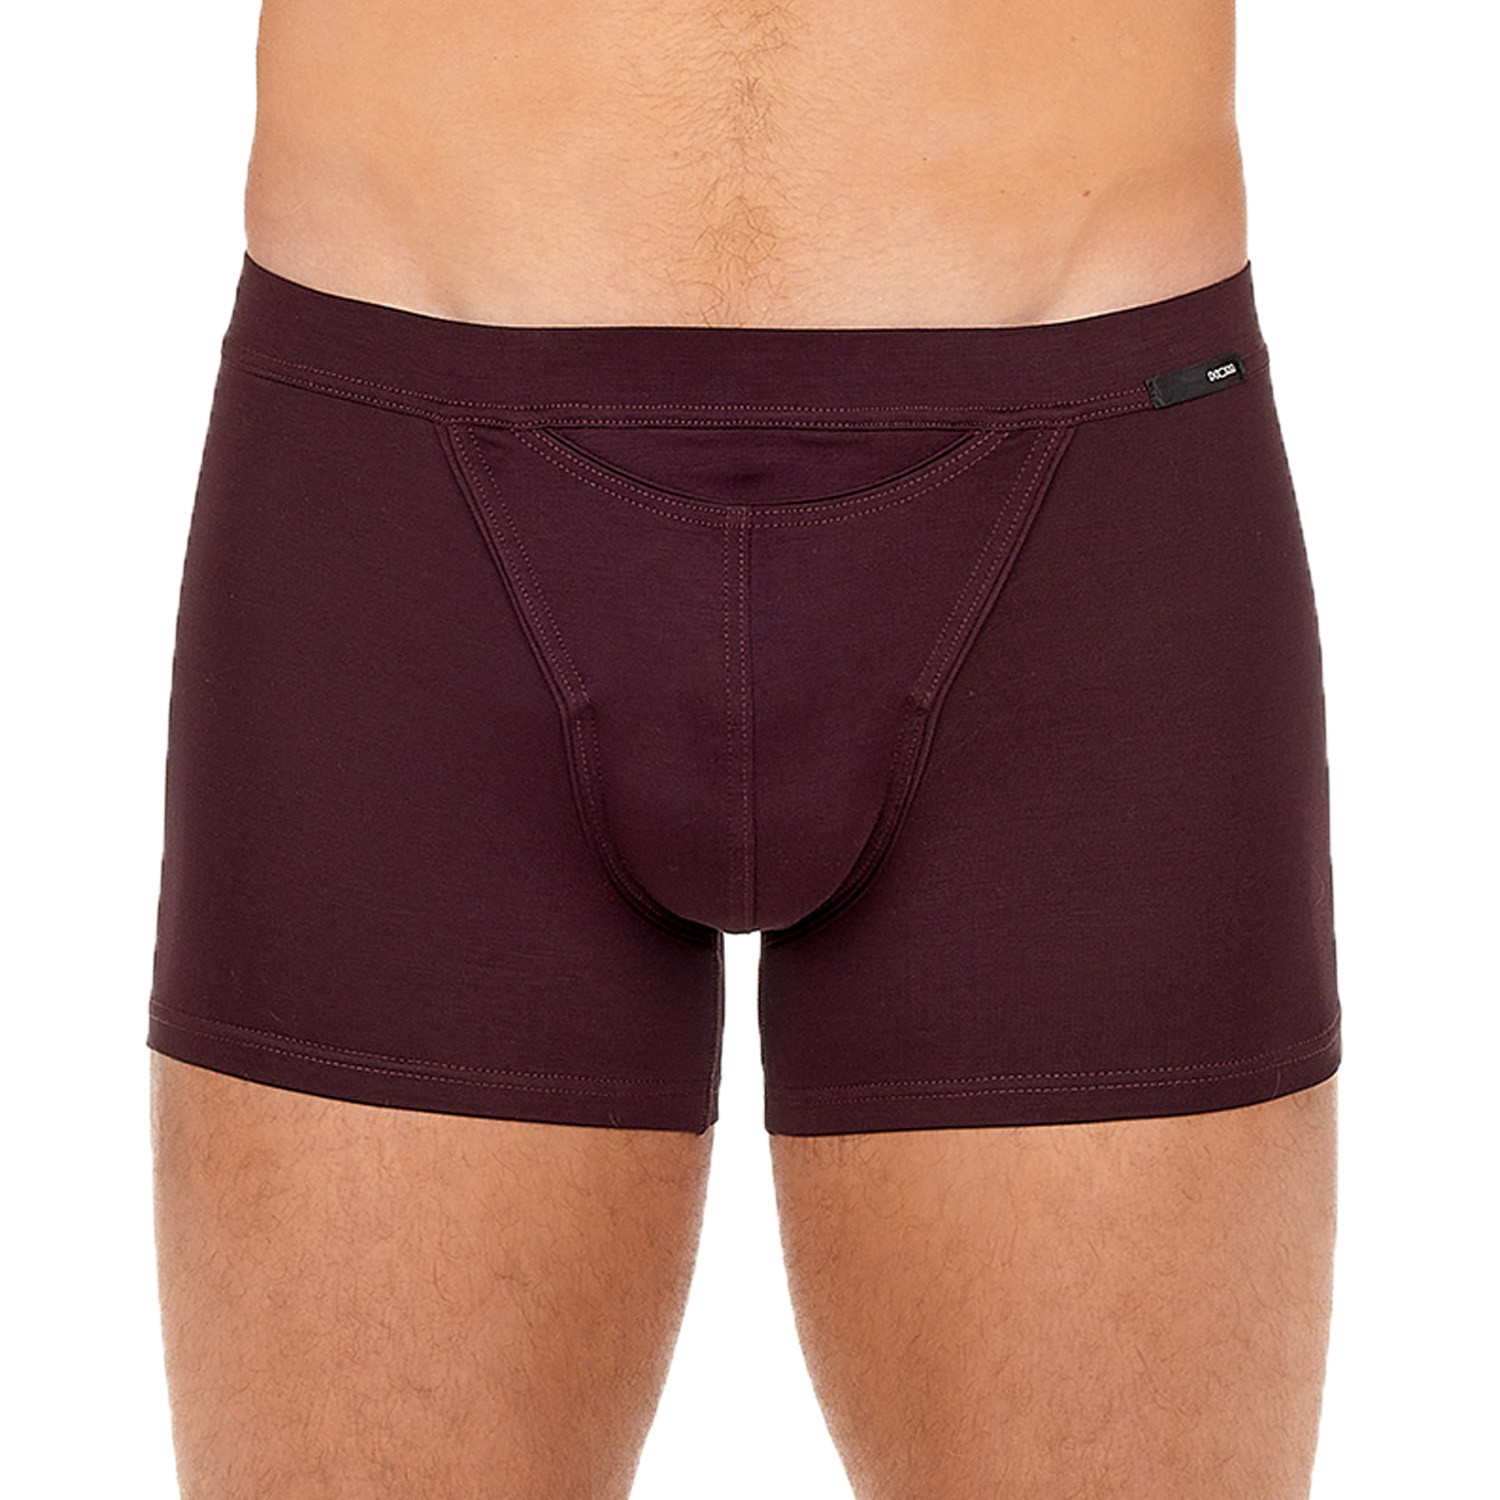 Boxer comfort HO1 Tencel Soft - burgundy: Boxers for man brand HOM